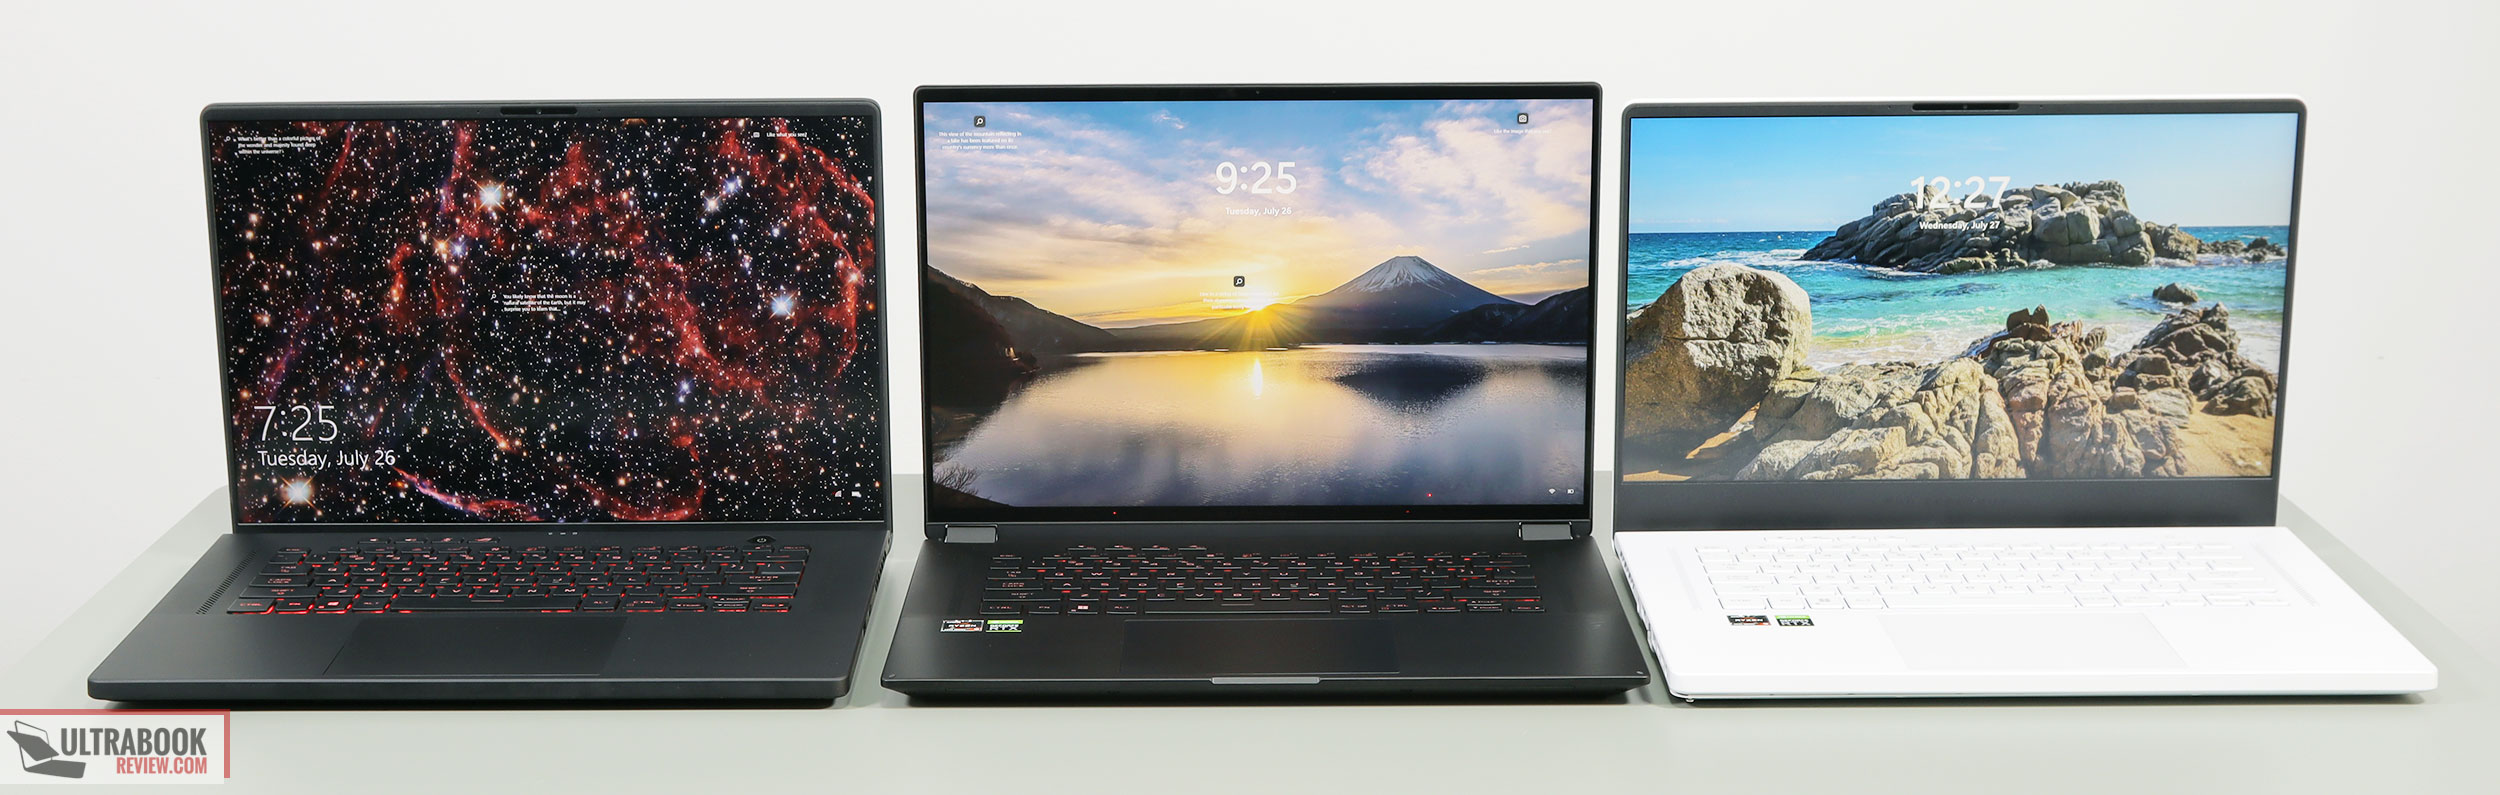 ROg portbale gaming laptops: Zephyrus M16 (Left), Flow X16 (middle), Zephyrus G15 (Right)